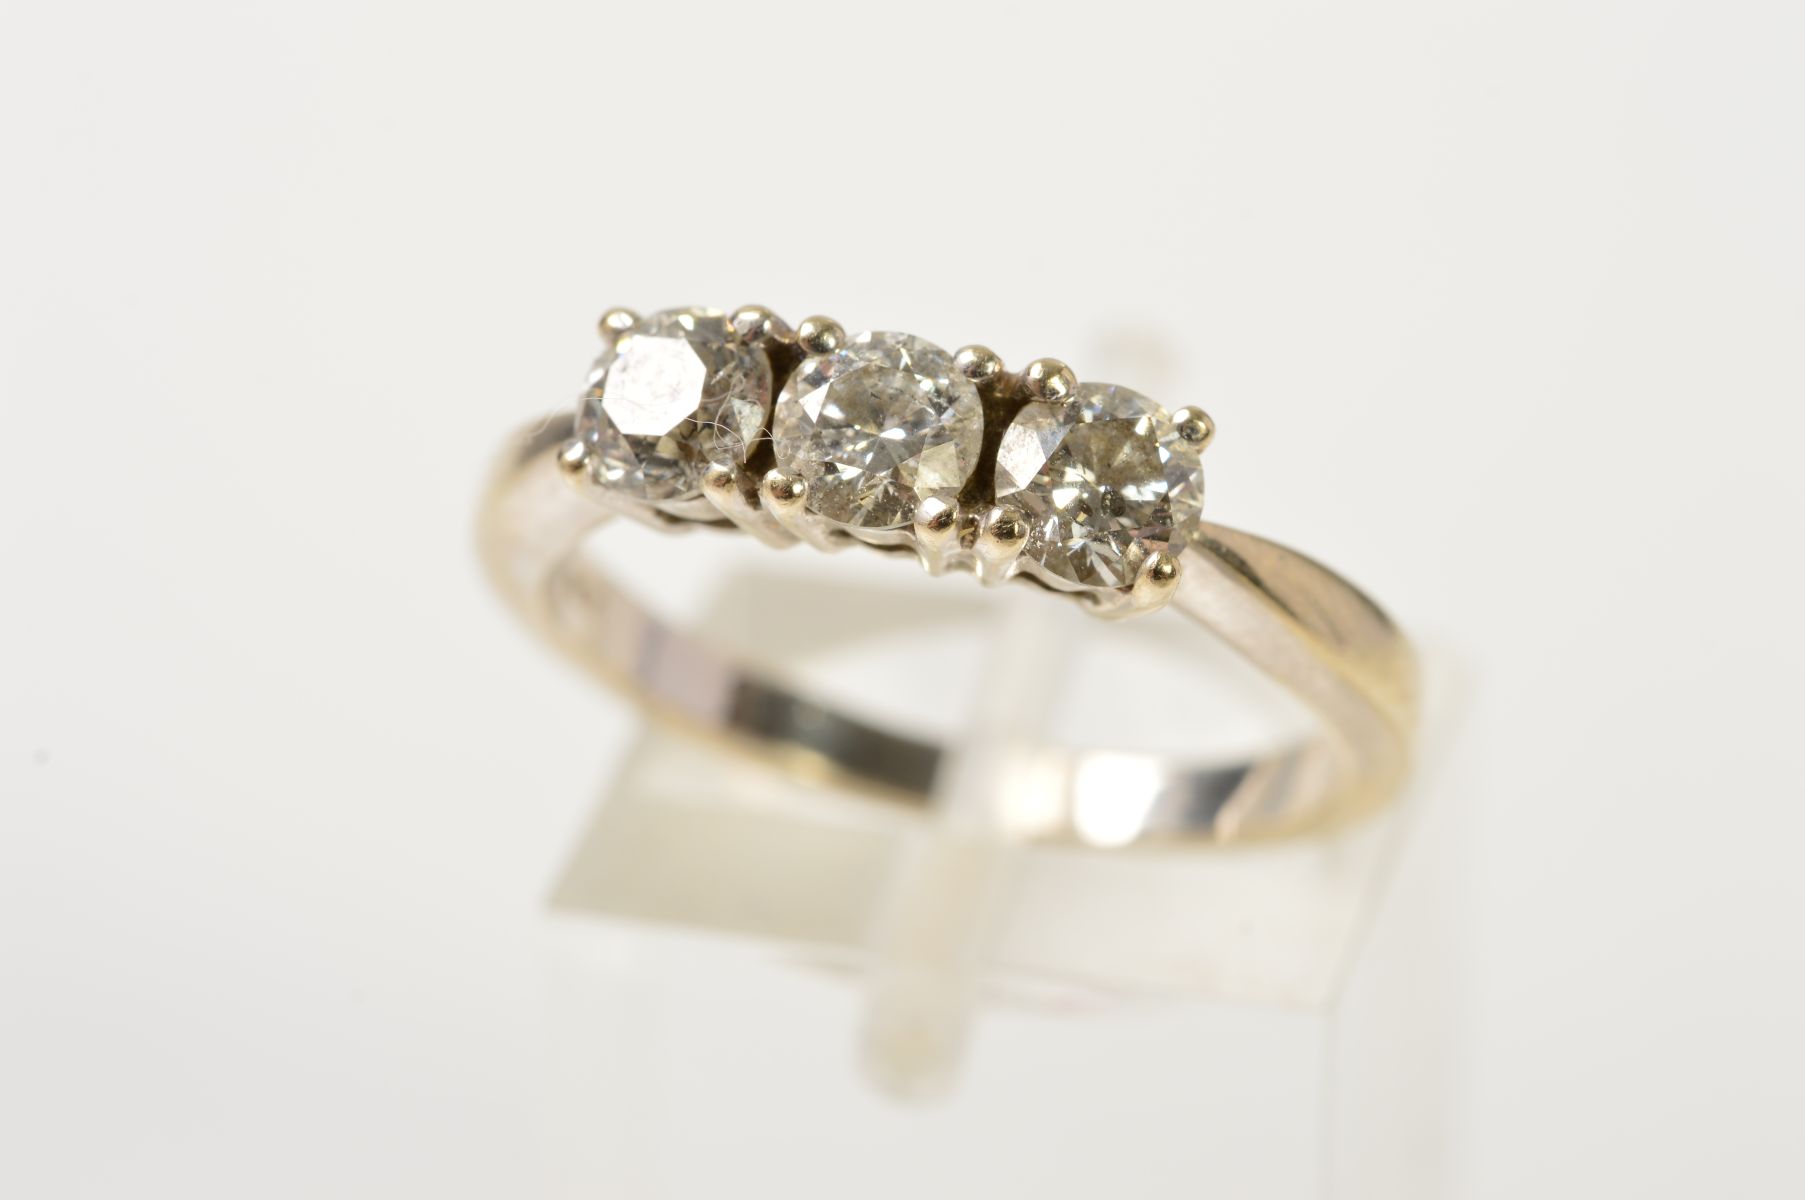 AN 18CT GOLD THREE STONE DIAMOND RING, designed as three brilliant cut diamonds, each within a